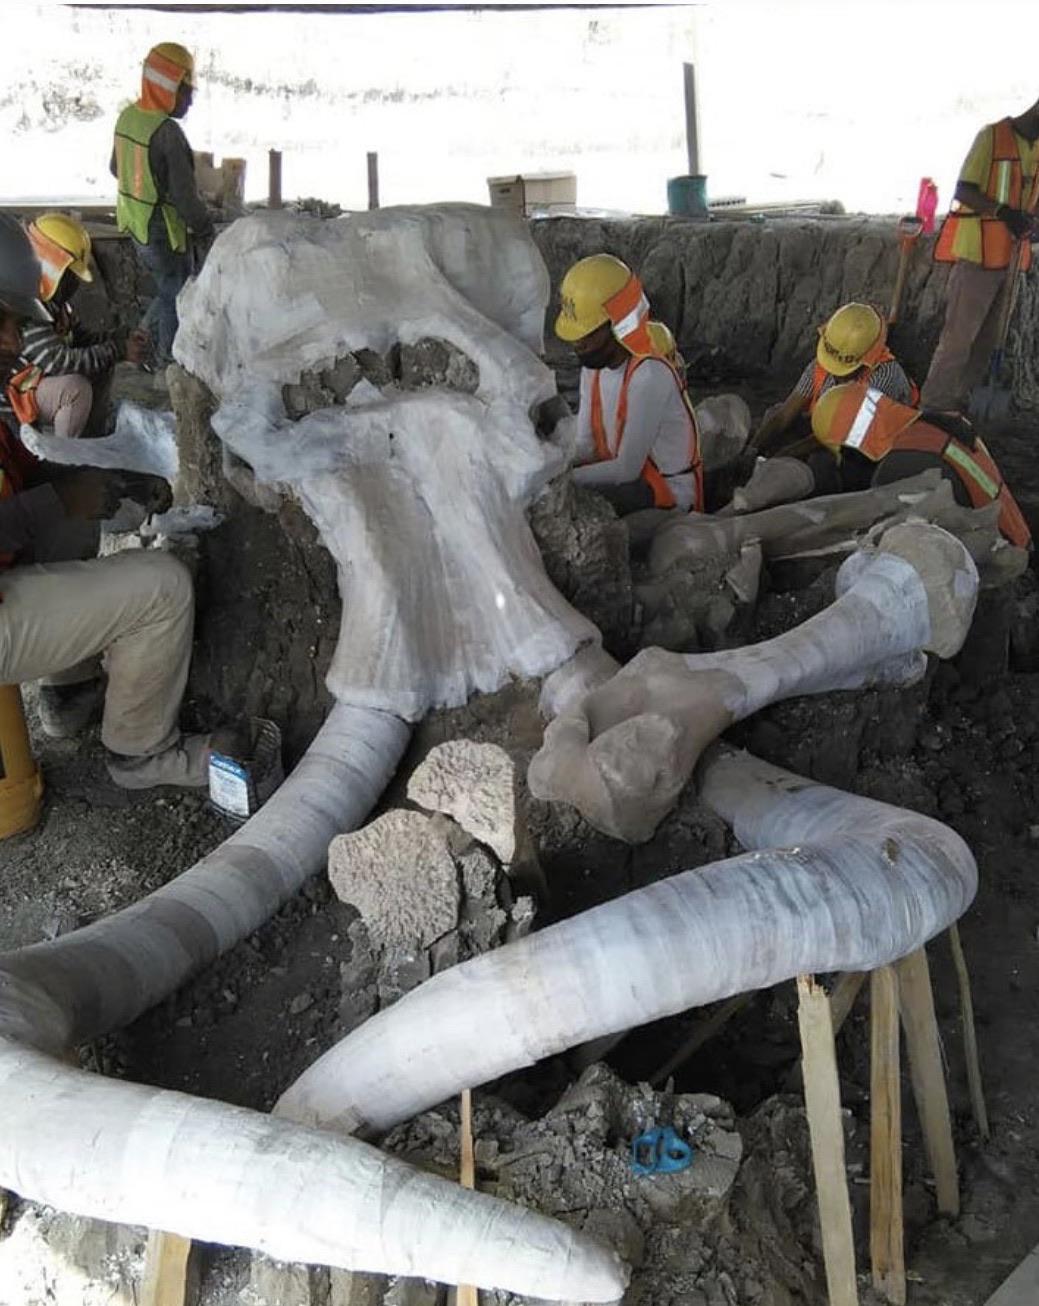 Mammoth+bones+found+in+central+Mexico